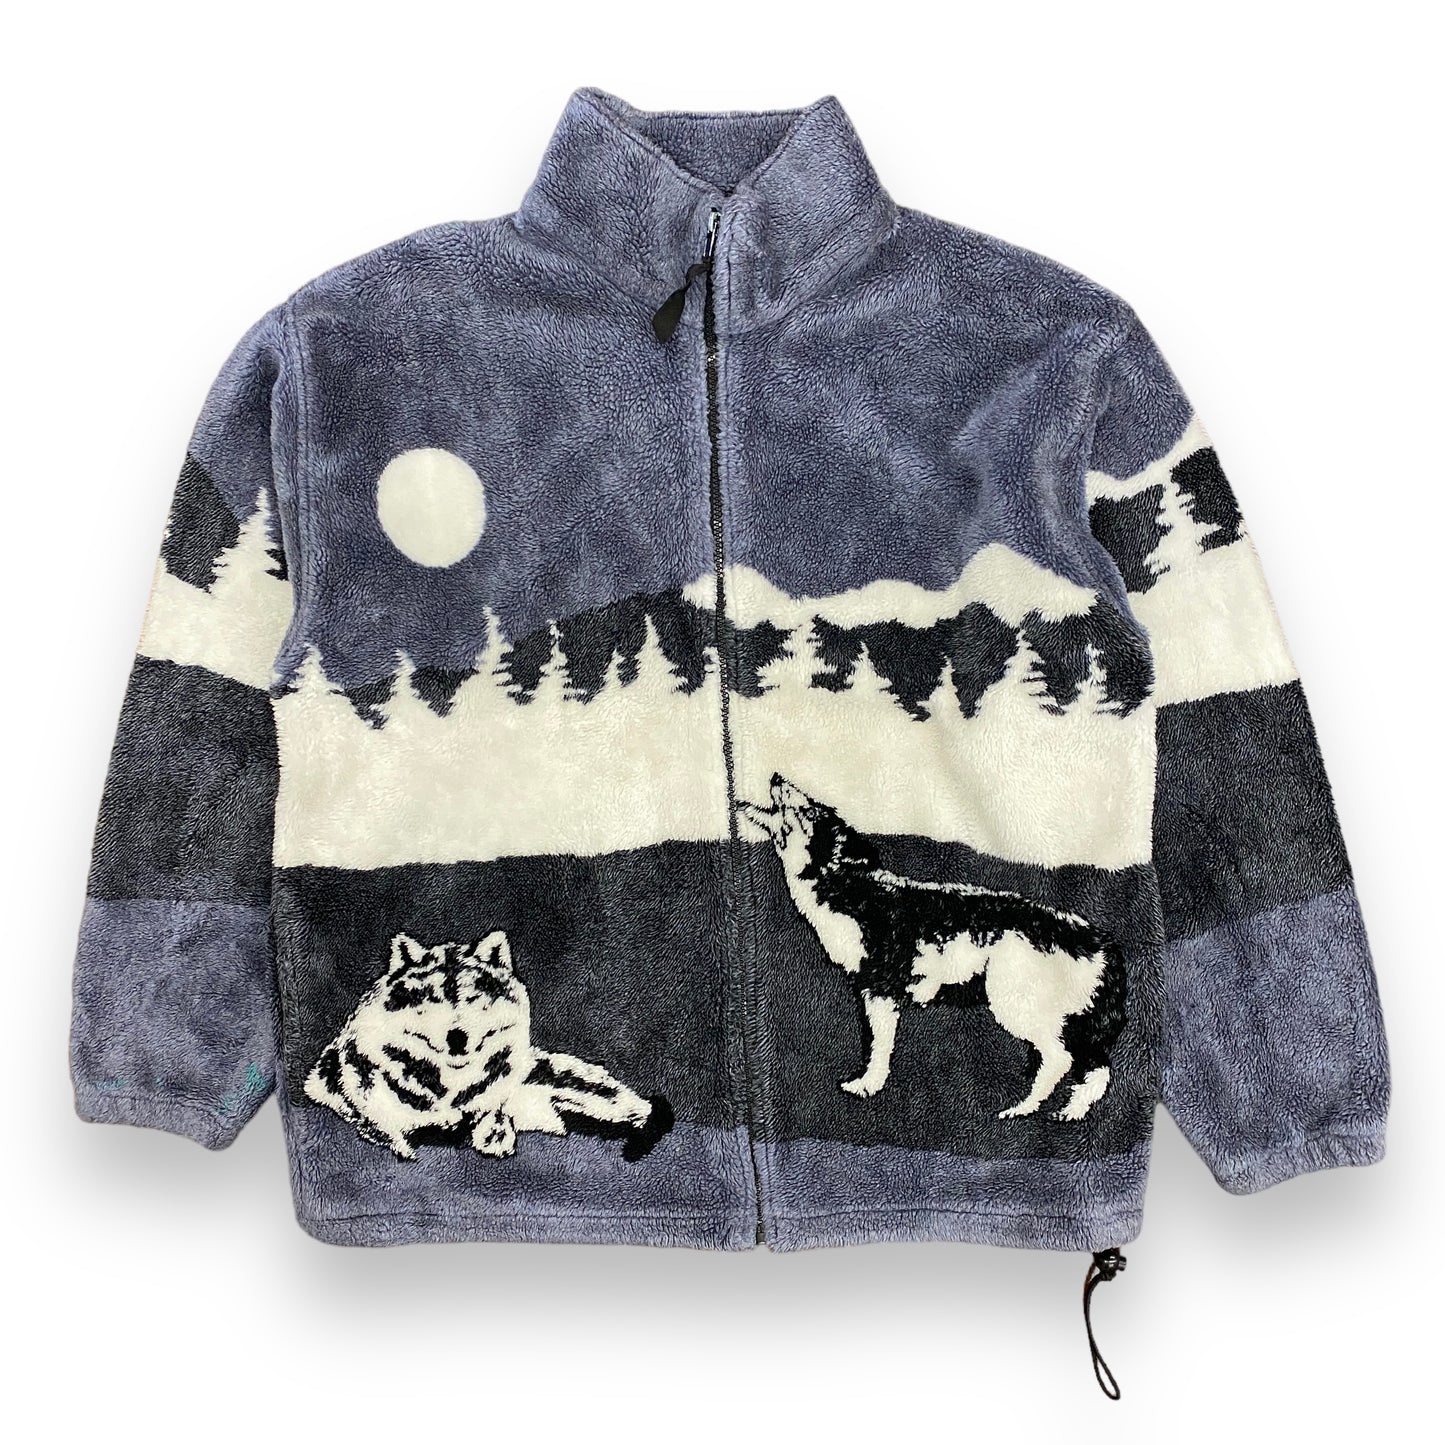 Vintage 90s All Over Print Wolf Fleece Jacket - Size Large